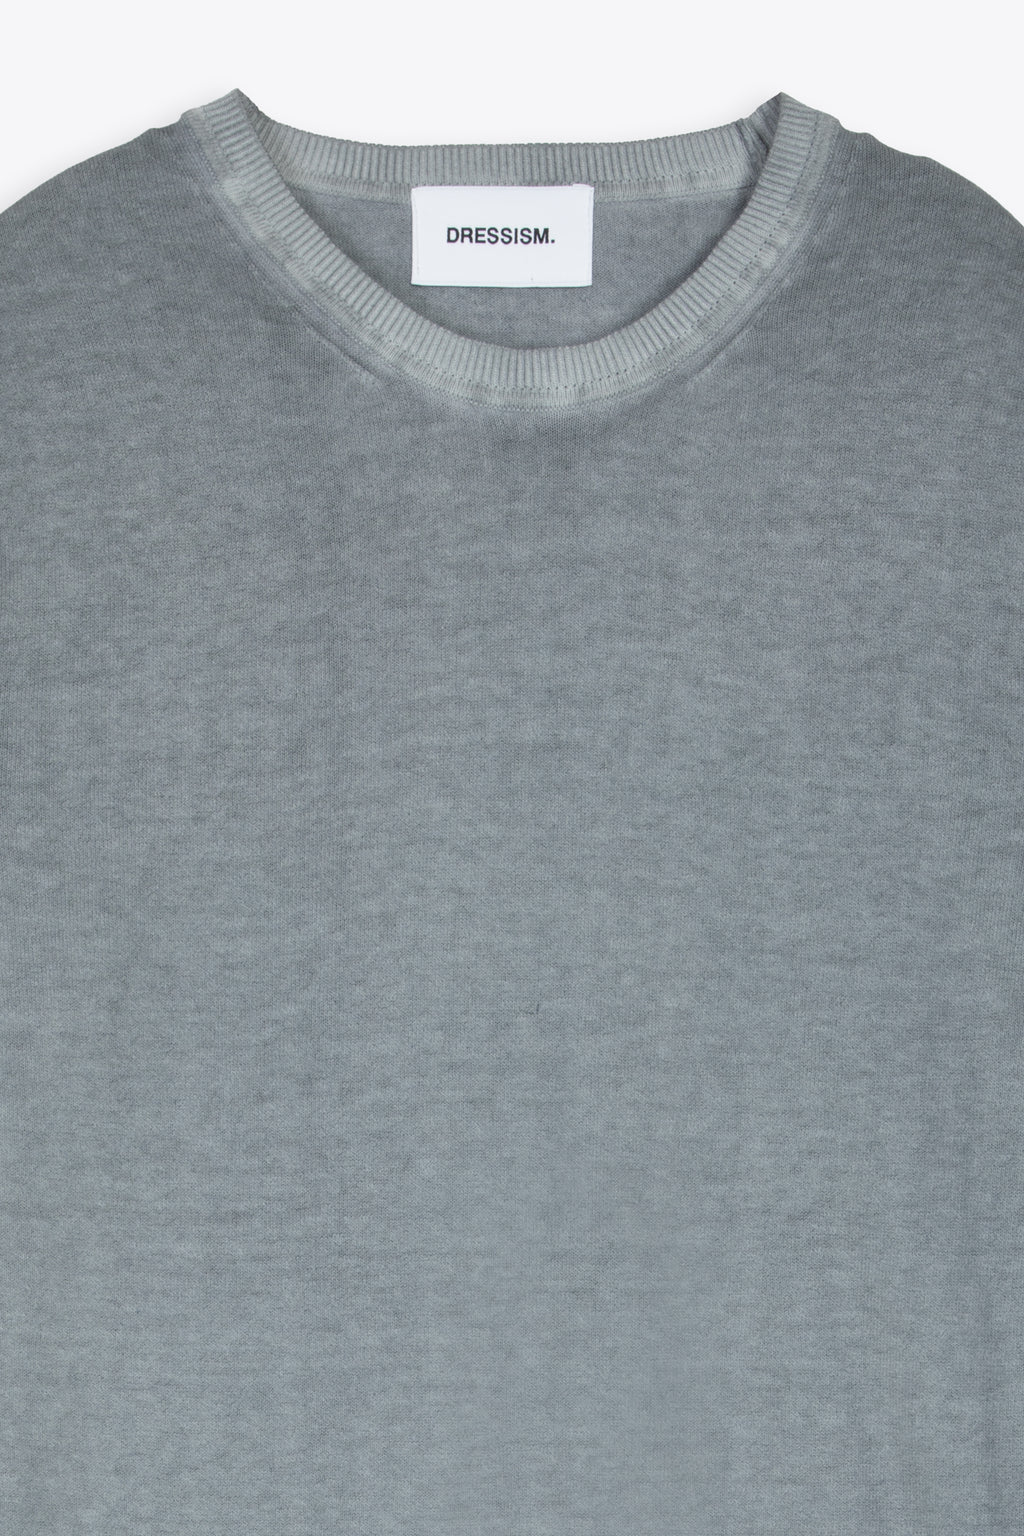 alt-image__Washed-grey-cotton-knit-t-shirt